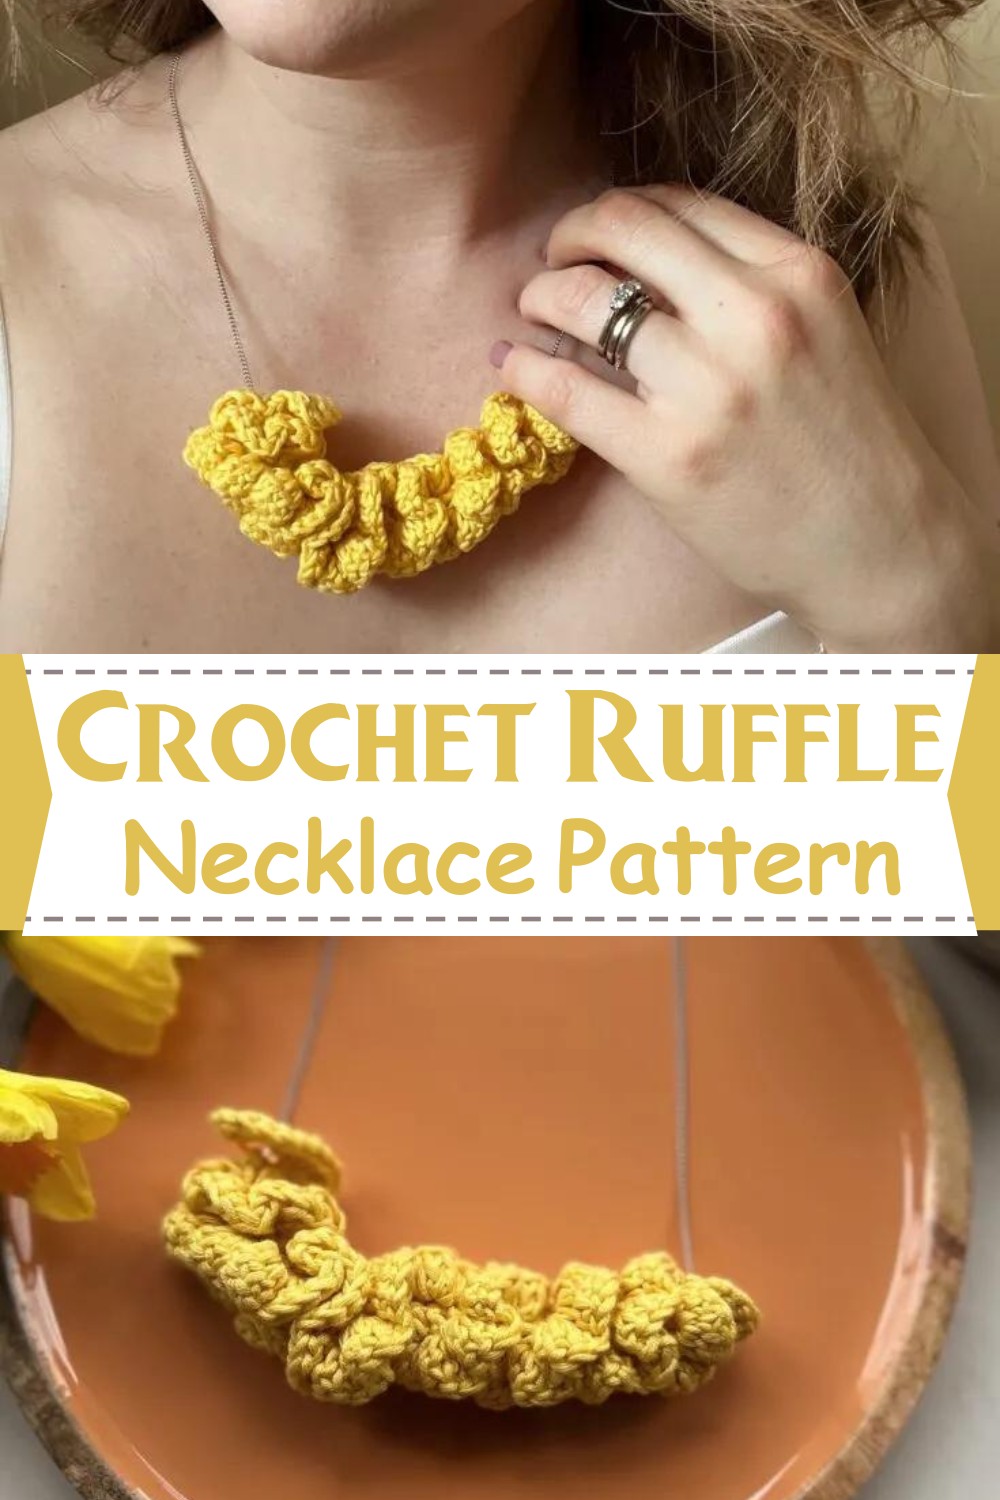 Crochet Ruffle Necklace Pattern